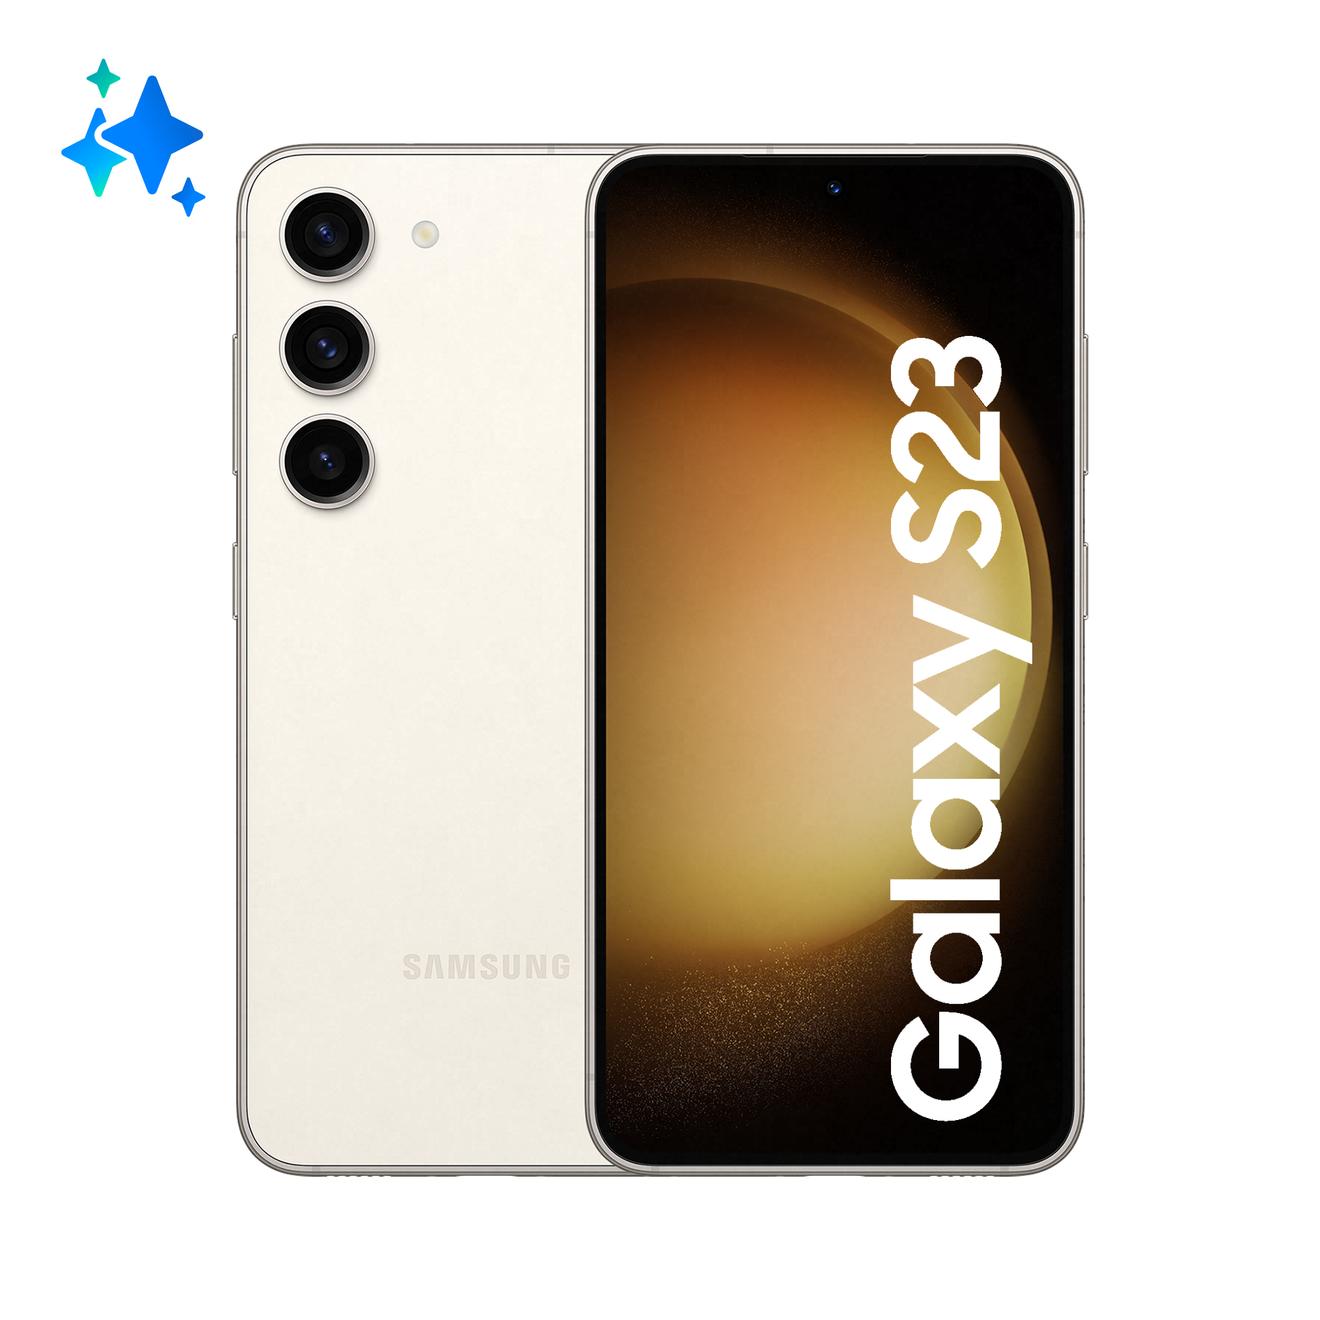 Offerta per Samsung - Galaxy S23 Smartphone AI Display 6.1'' Dynamic AMOLED 2X, Fotocamera 50MP, RAM 8GB, 128GB, 3.900 mAh, Cream a 649€ in Comet